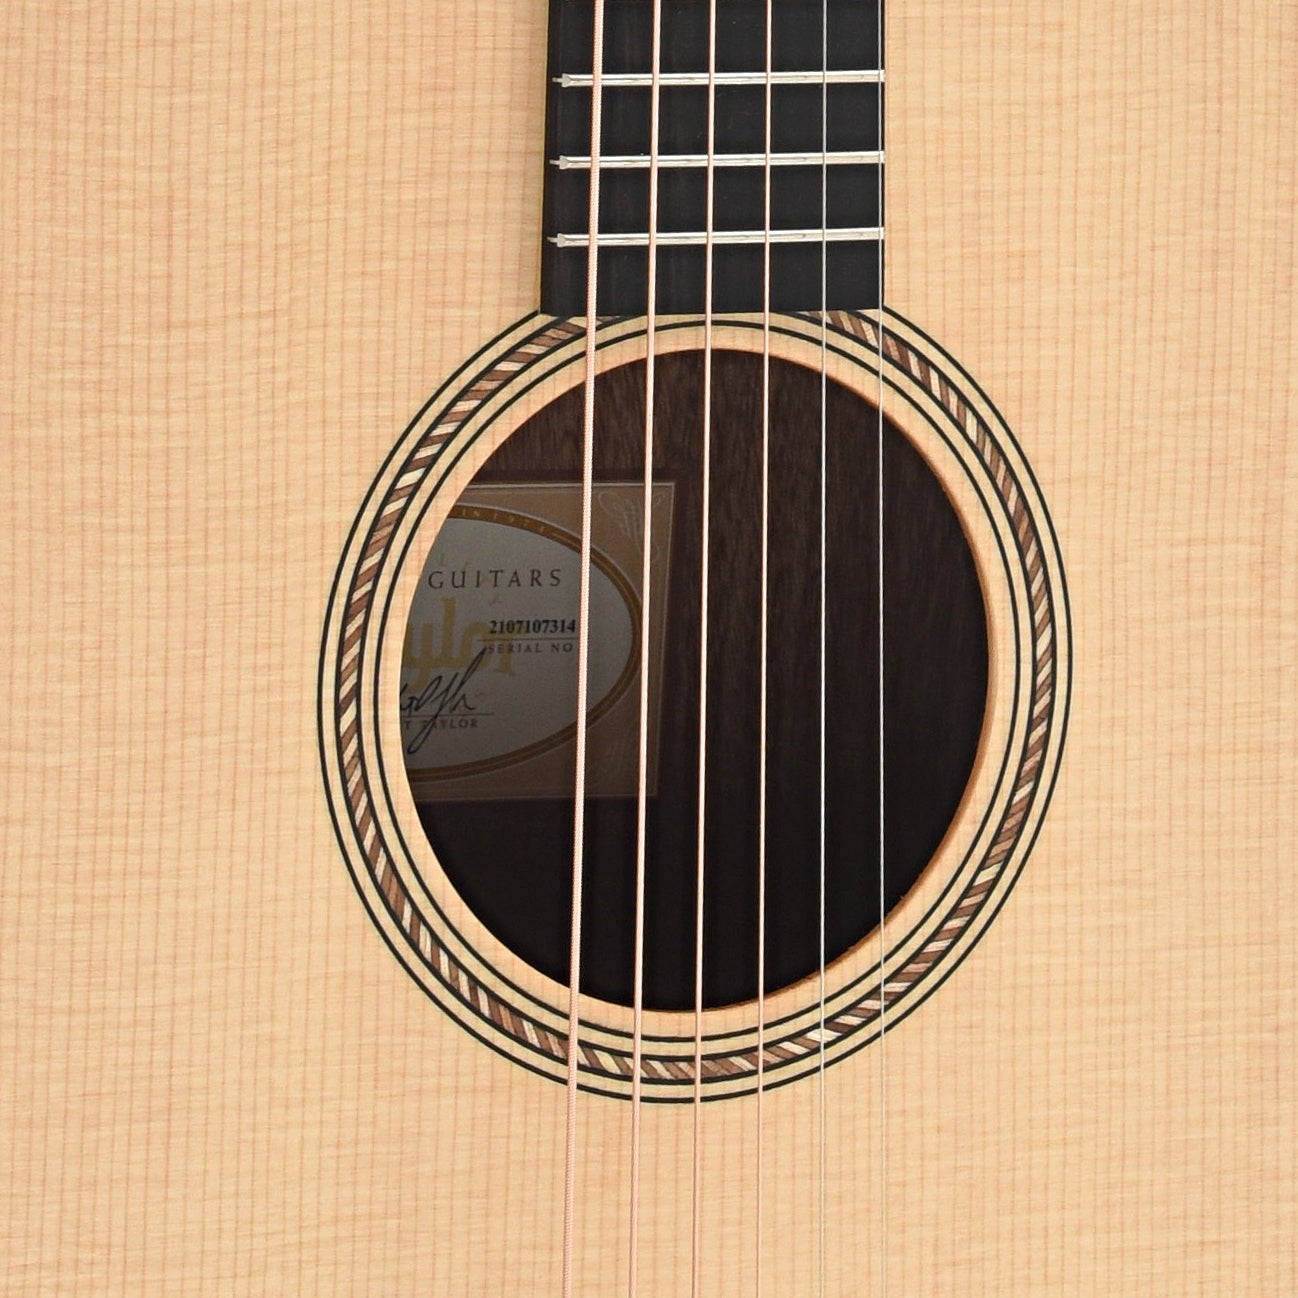 Soundhole of Taylor Academy 10e Acoustic Guitar